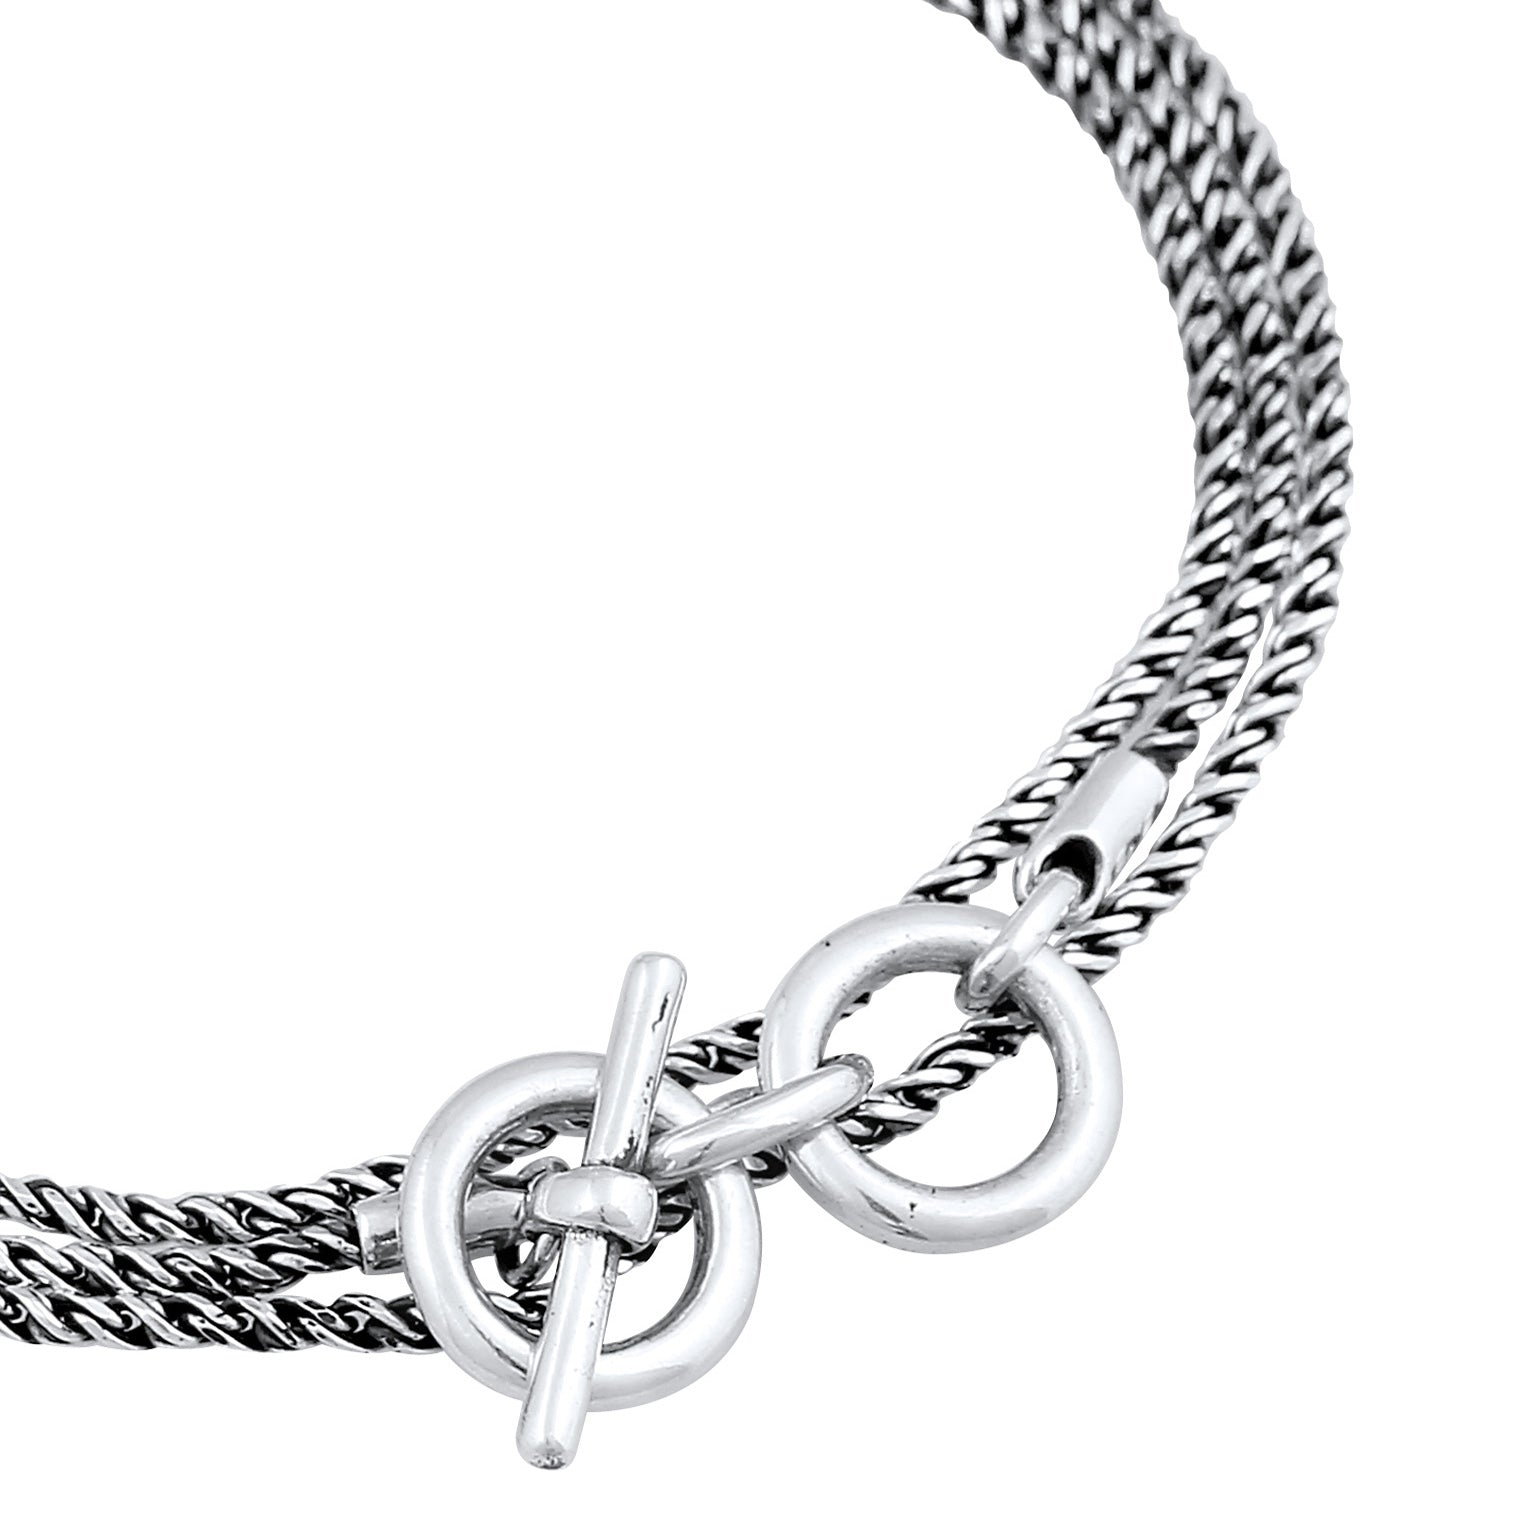 Grau - KUZZOI | Armband Kordelkette T-Bar | 925 Sterling Silber Oxidiert